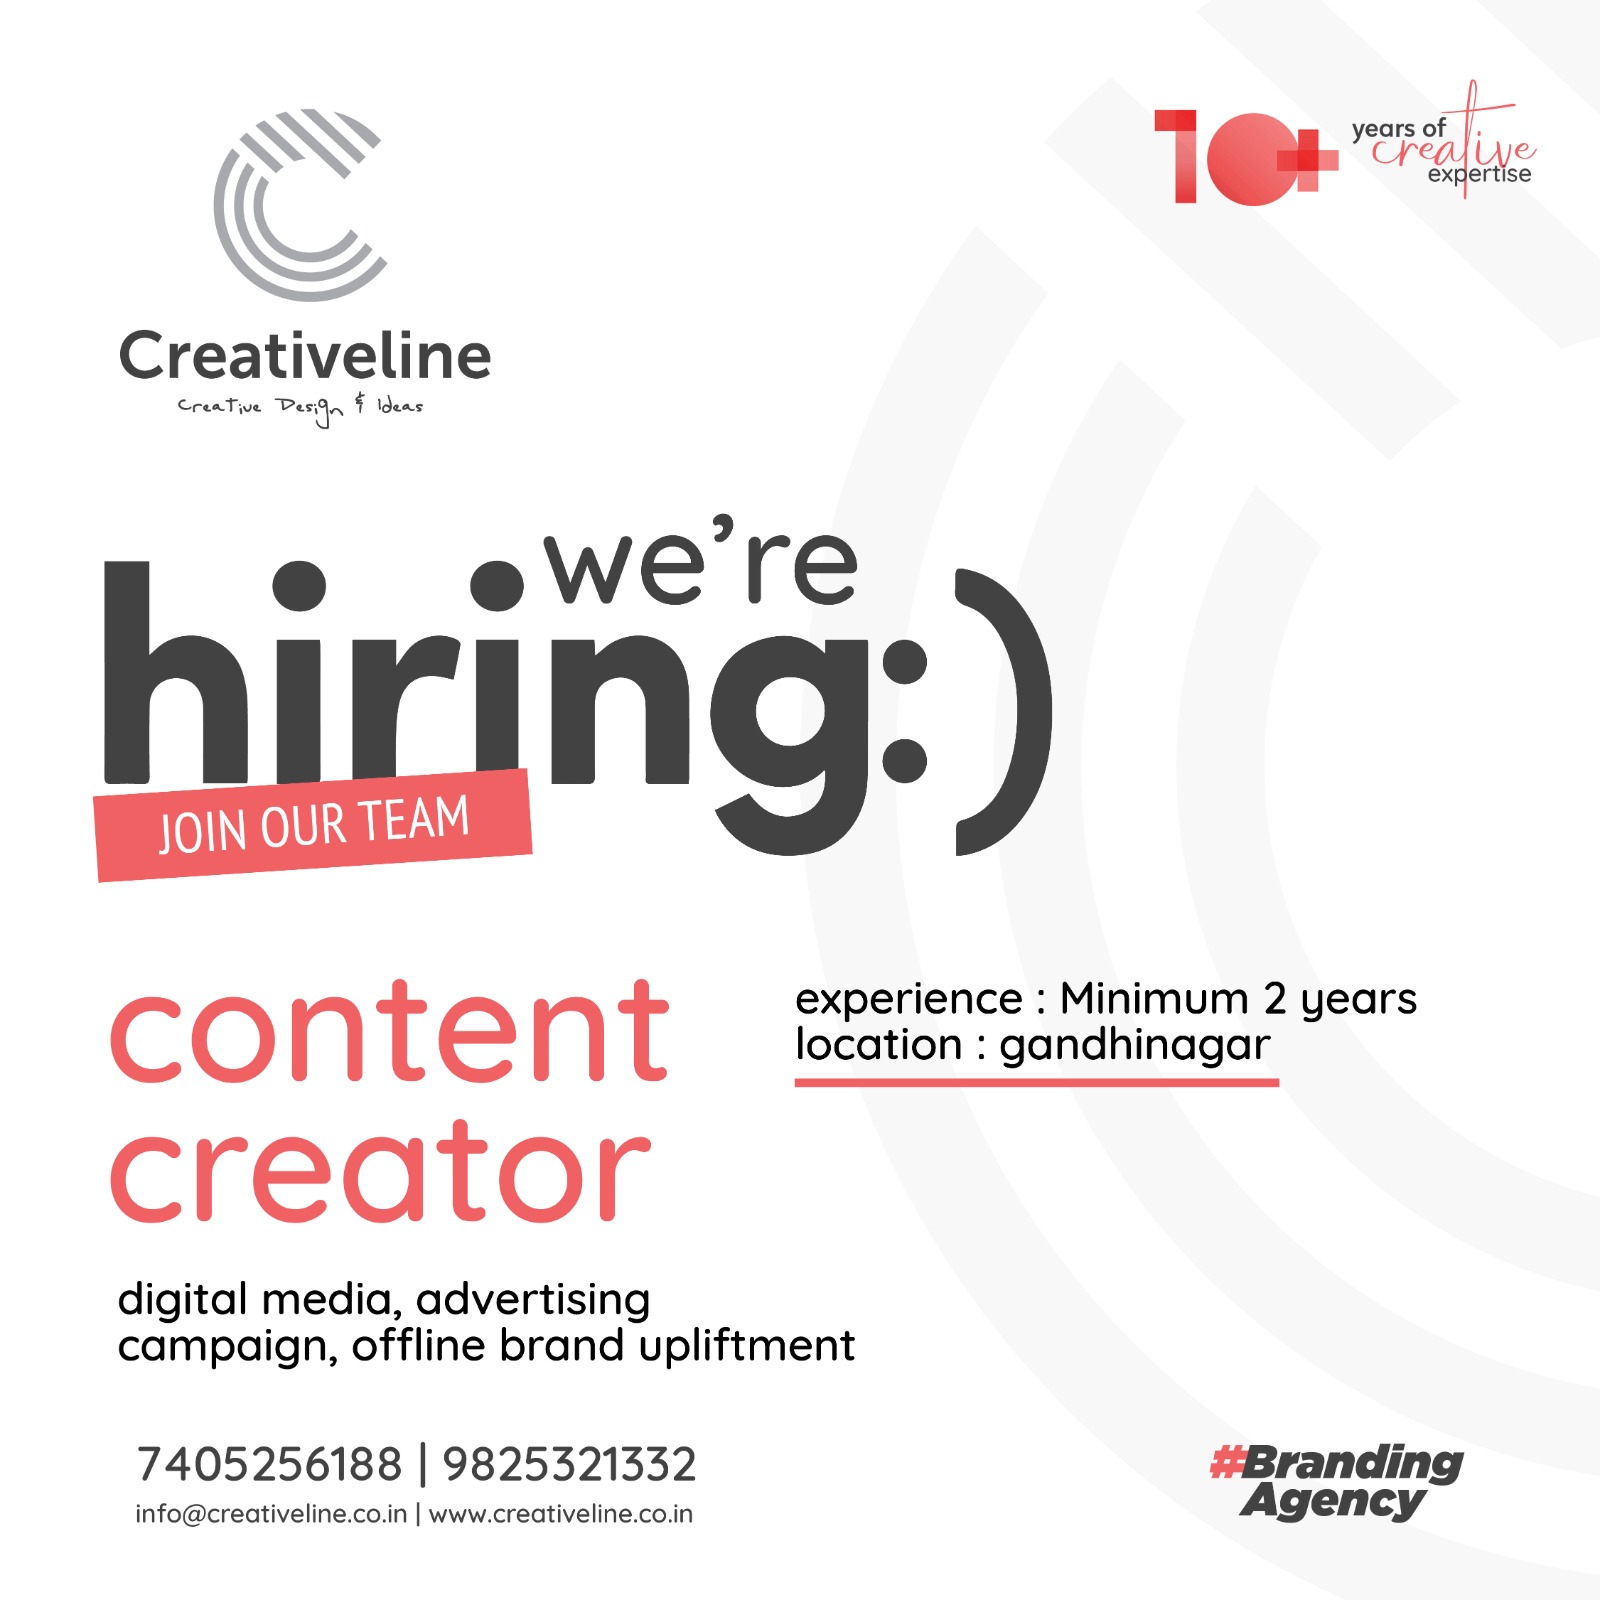 Content Creator content writer copy writer job hiring